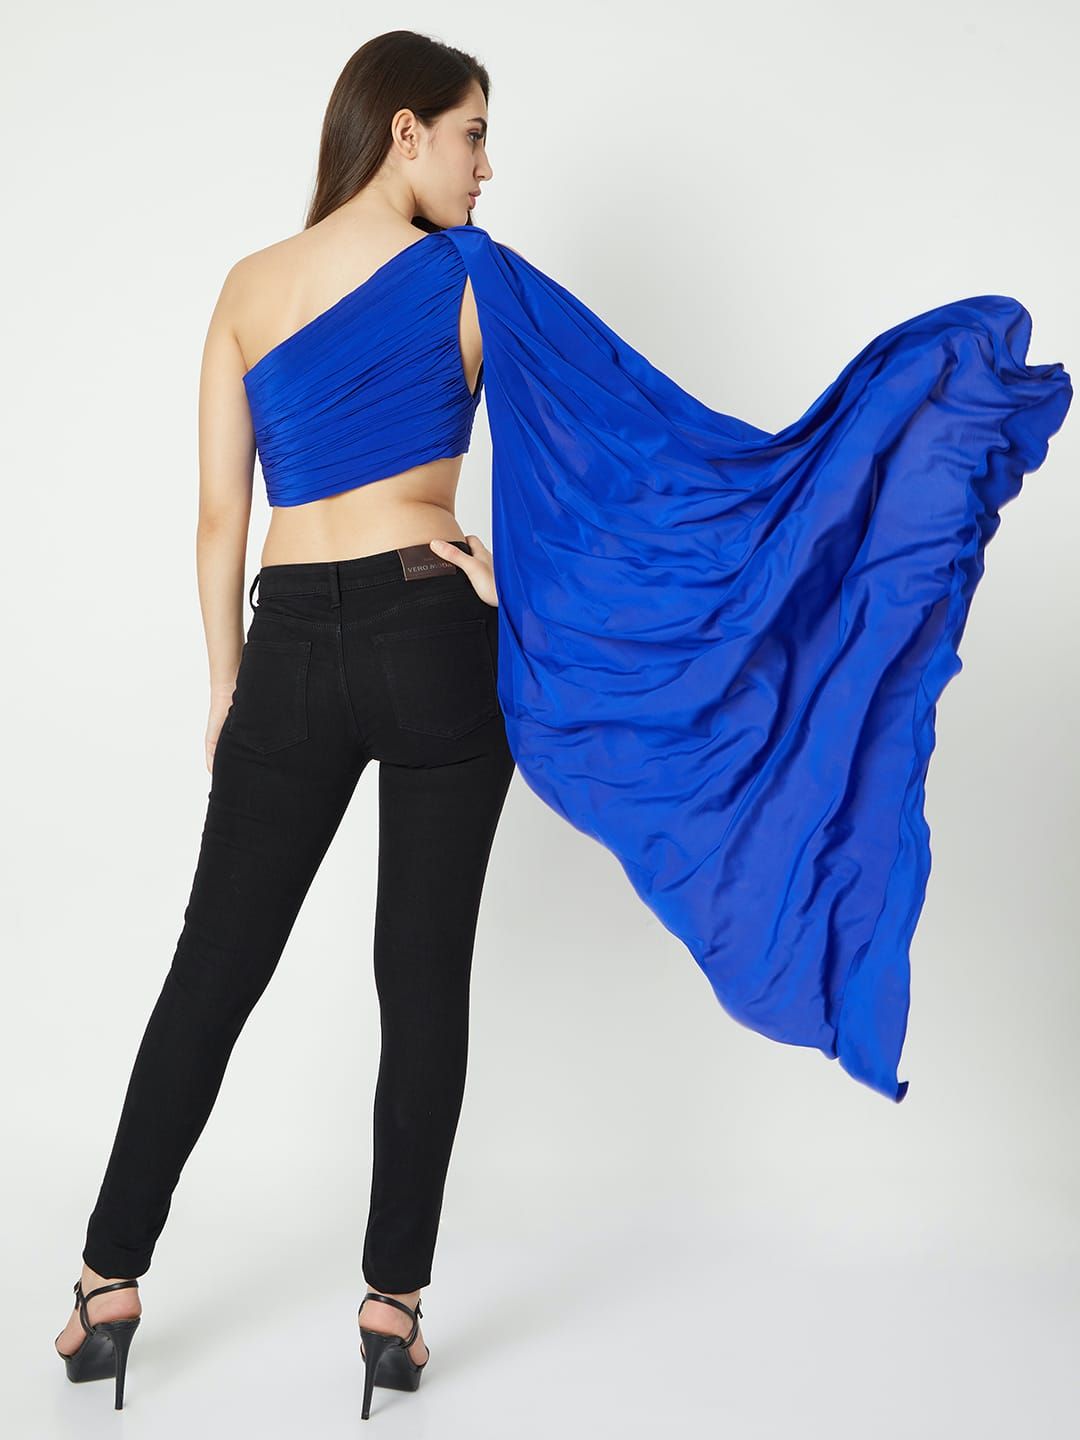 Blue Draped One Shoulder designer clothing - Reema Anand Label